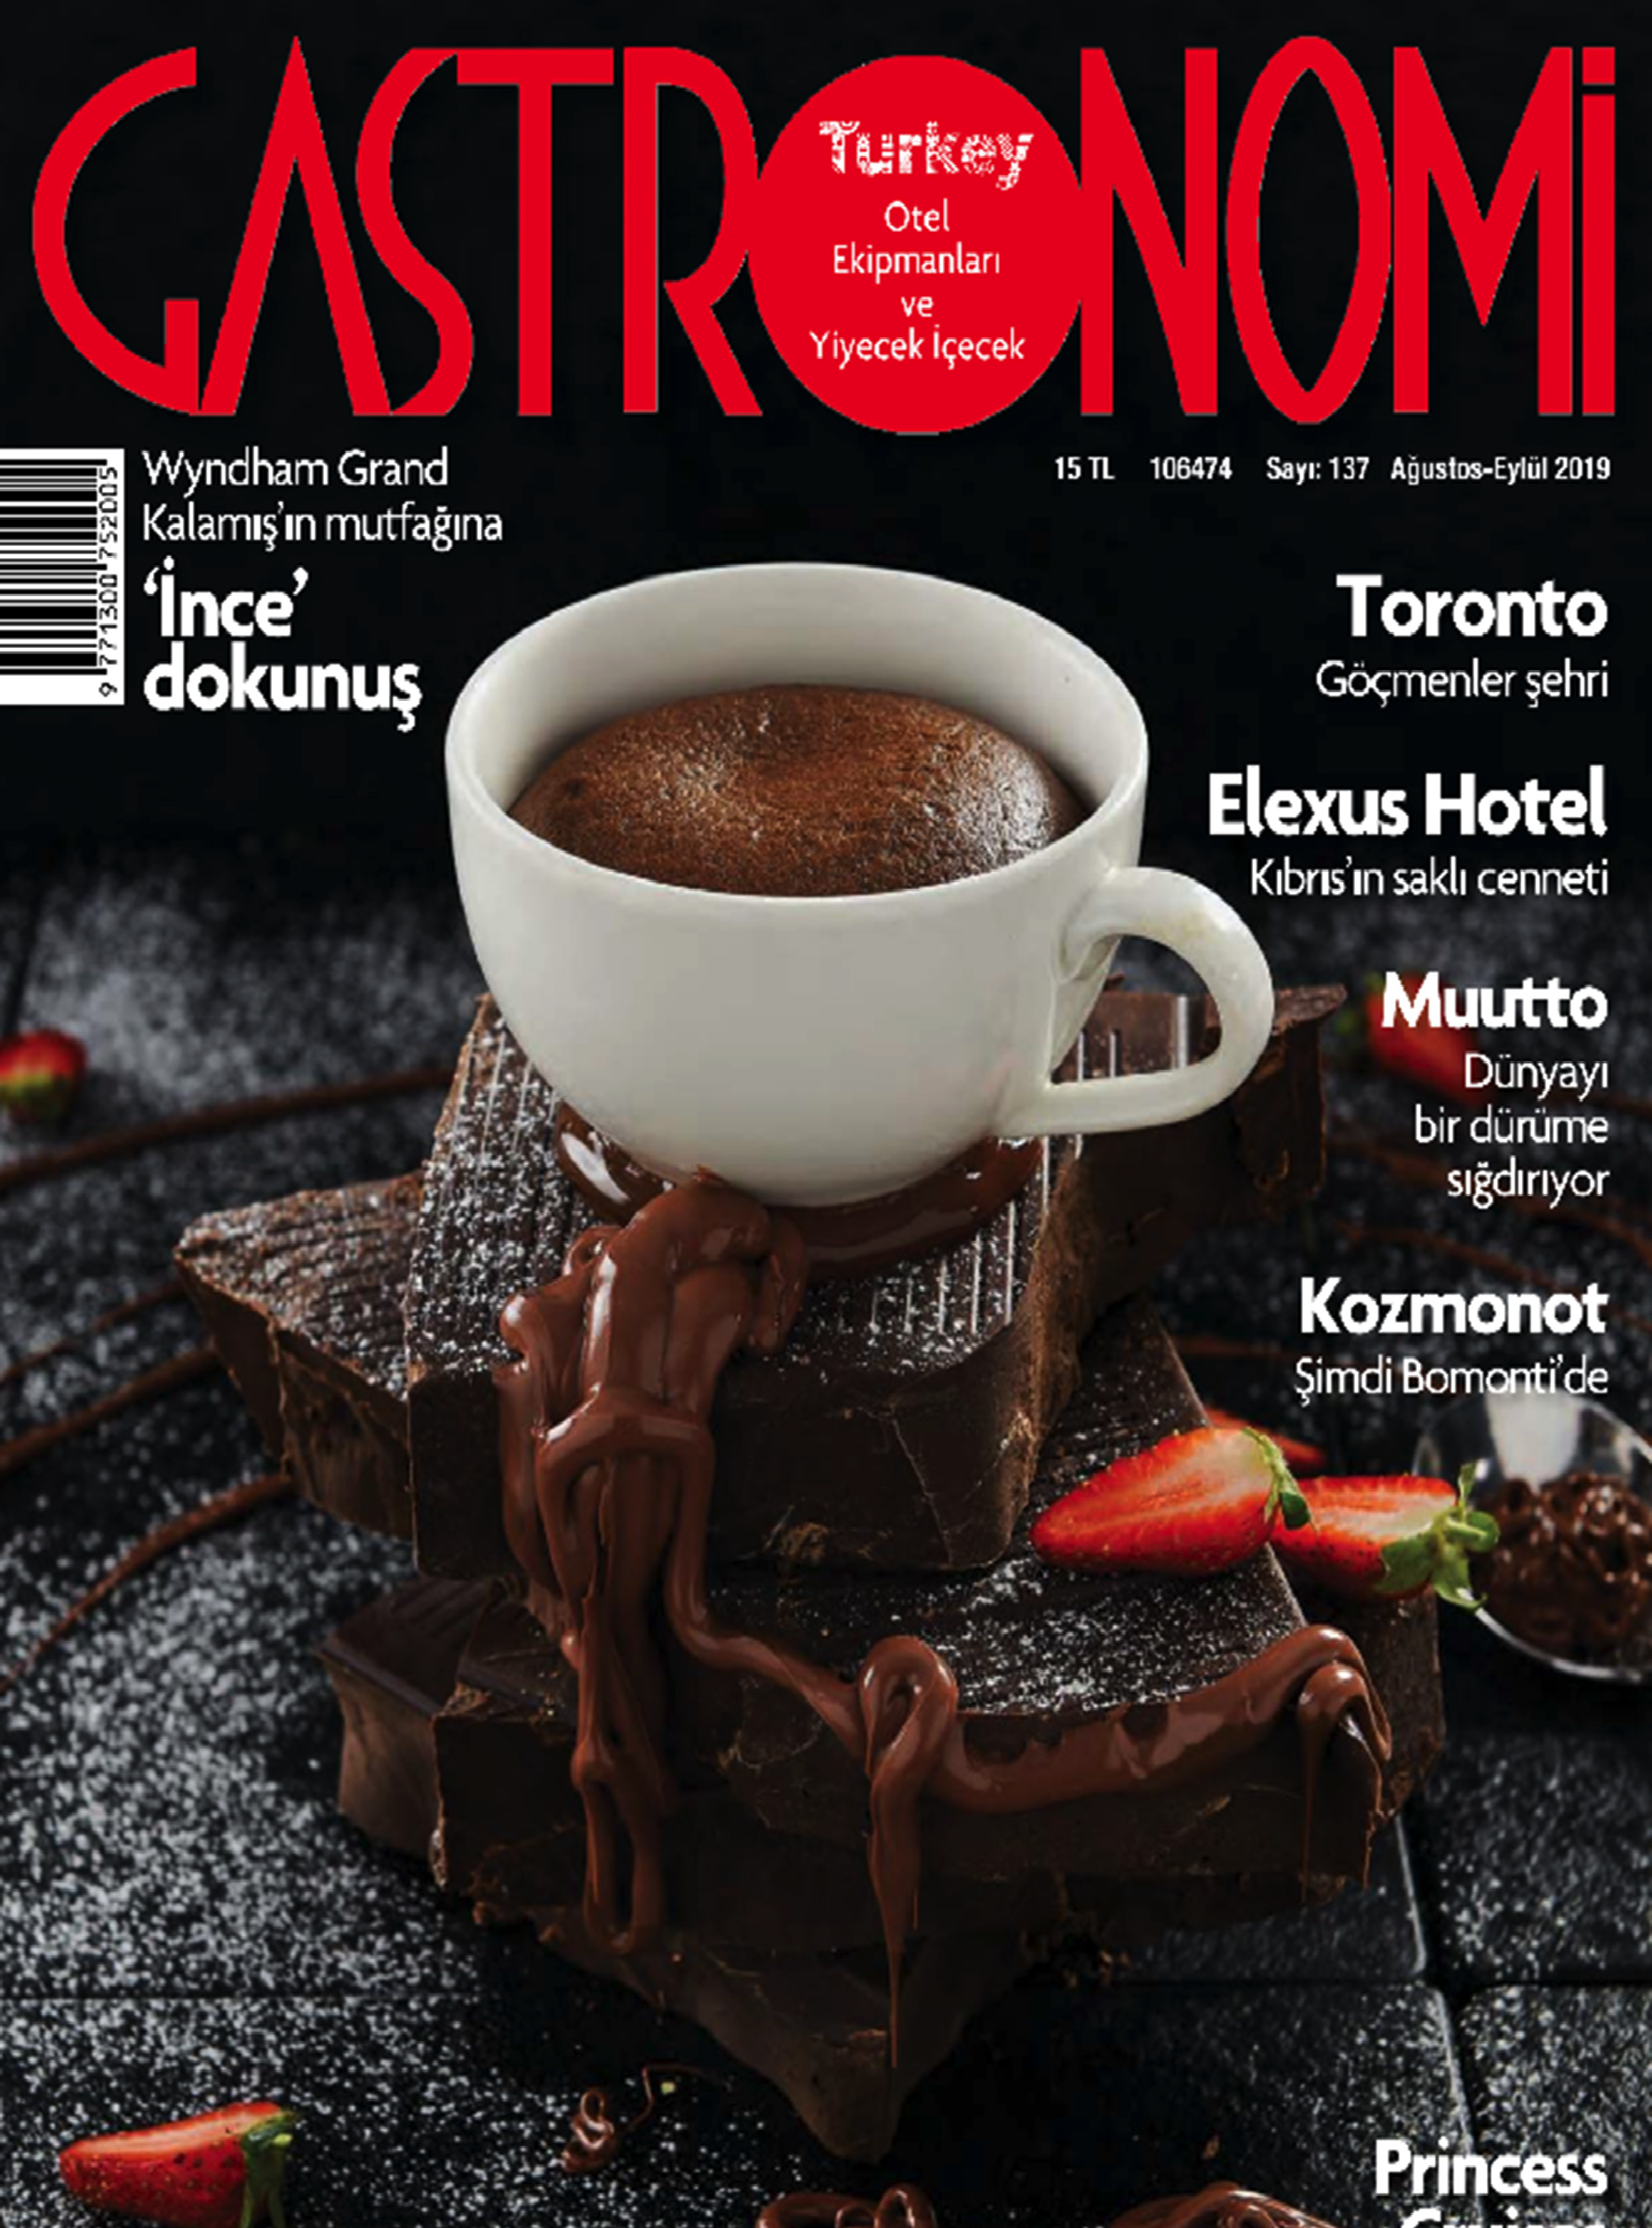 Gastronomi Ağustos-Eylül ‘19 